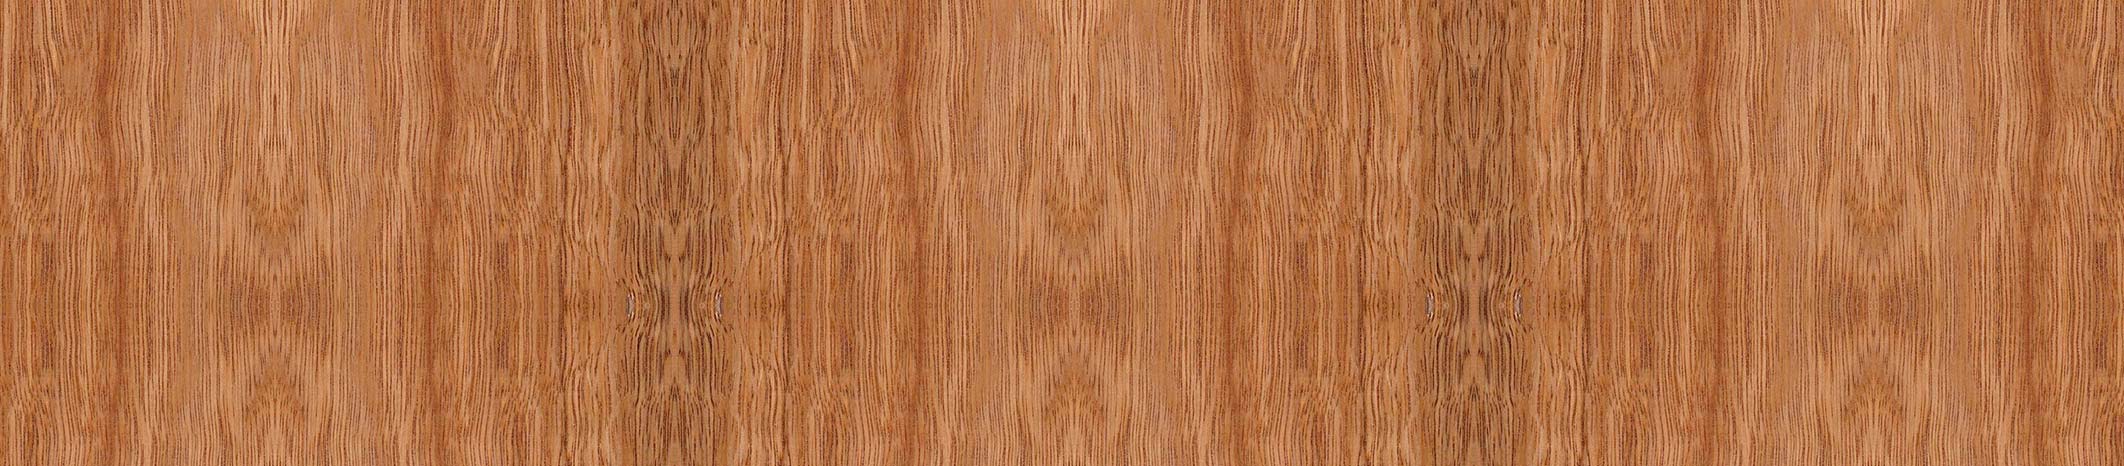 American Oak Flooring